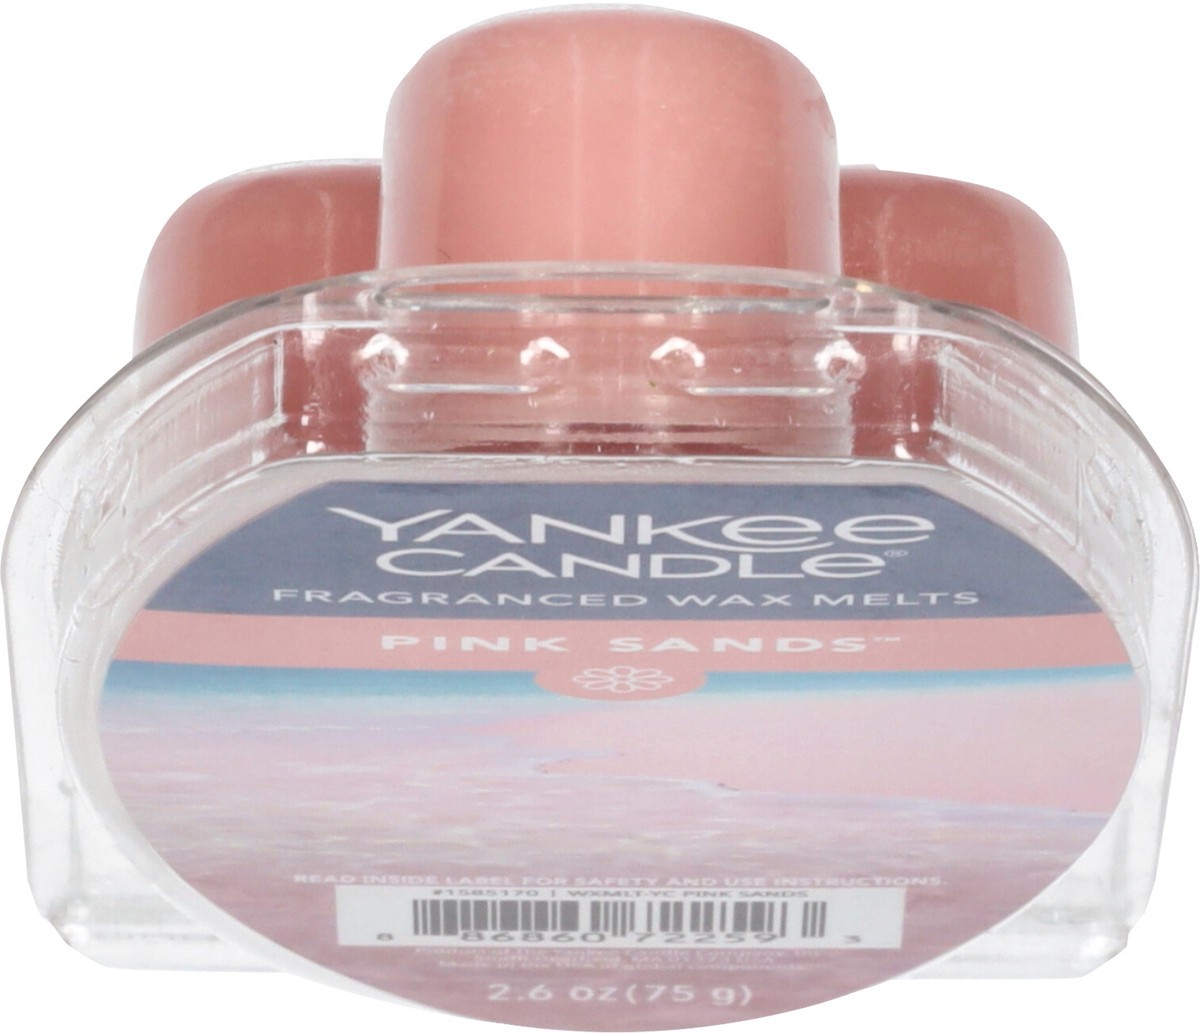 Yankee Candle Fragranced Pink Sands Wax Melts 2.6 oz 2.60 ea